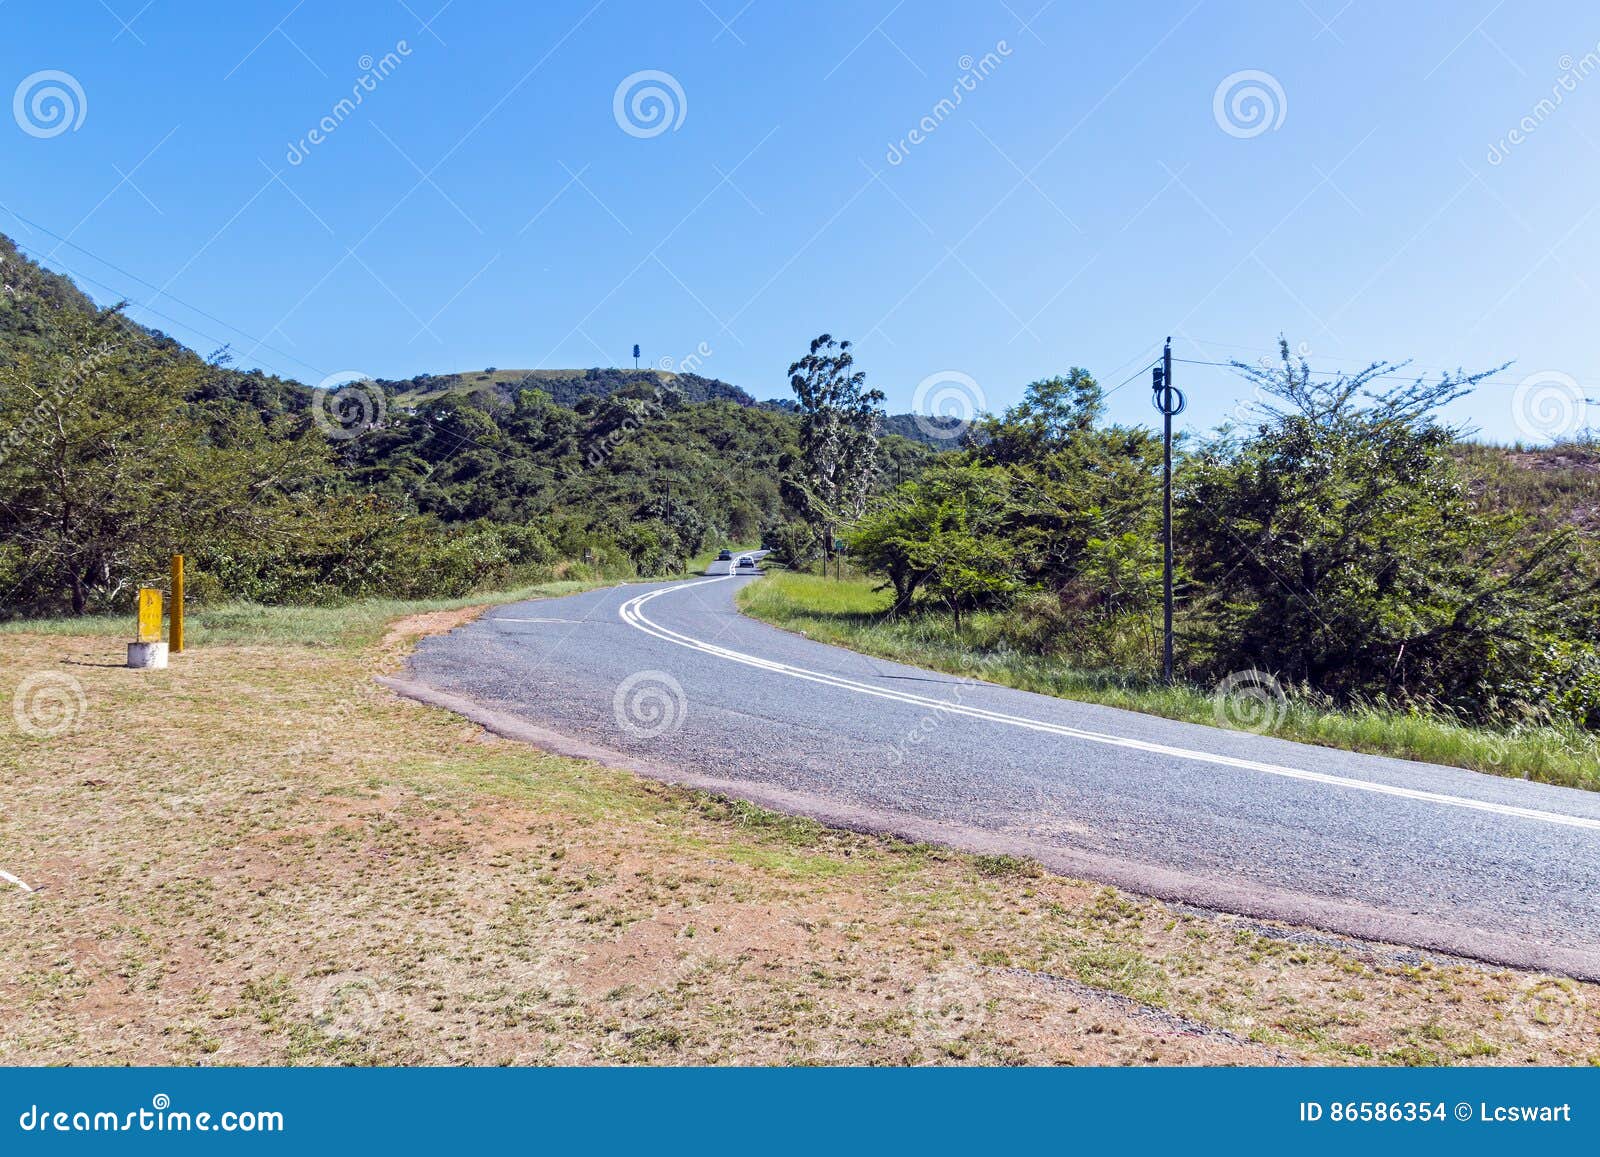 Paisaje rural de Asphalt Road Curving Through Rural. Carretera de asfalto rural que curva con paisaje rural de la vegetación verde en Shongweni cerca de Durban, Suráfrica